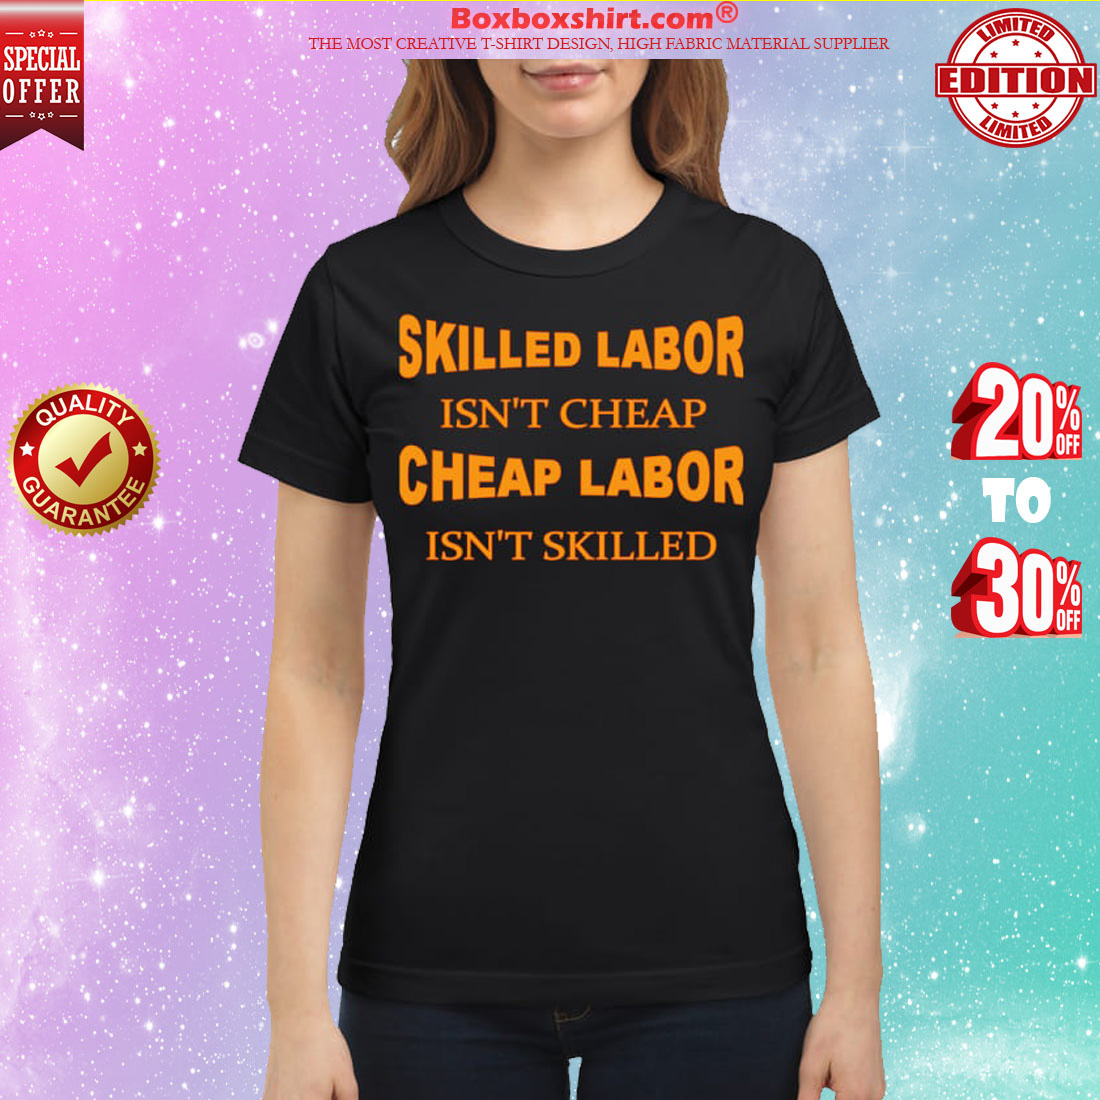 Skilled labor isn't cheap cheap labor isn't skilled classic shirt